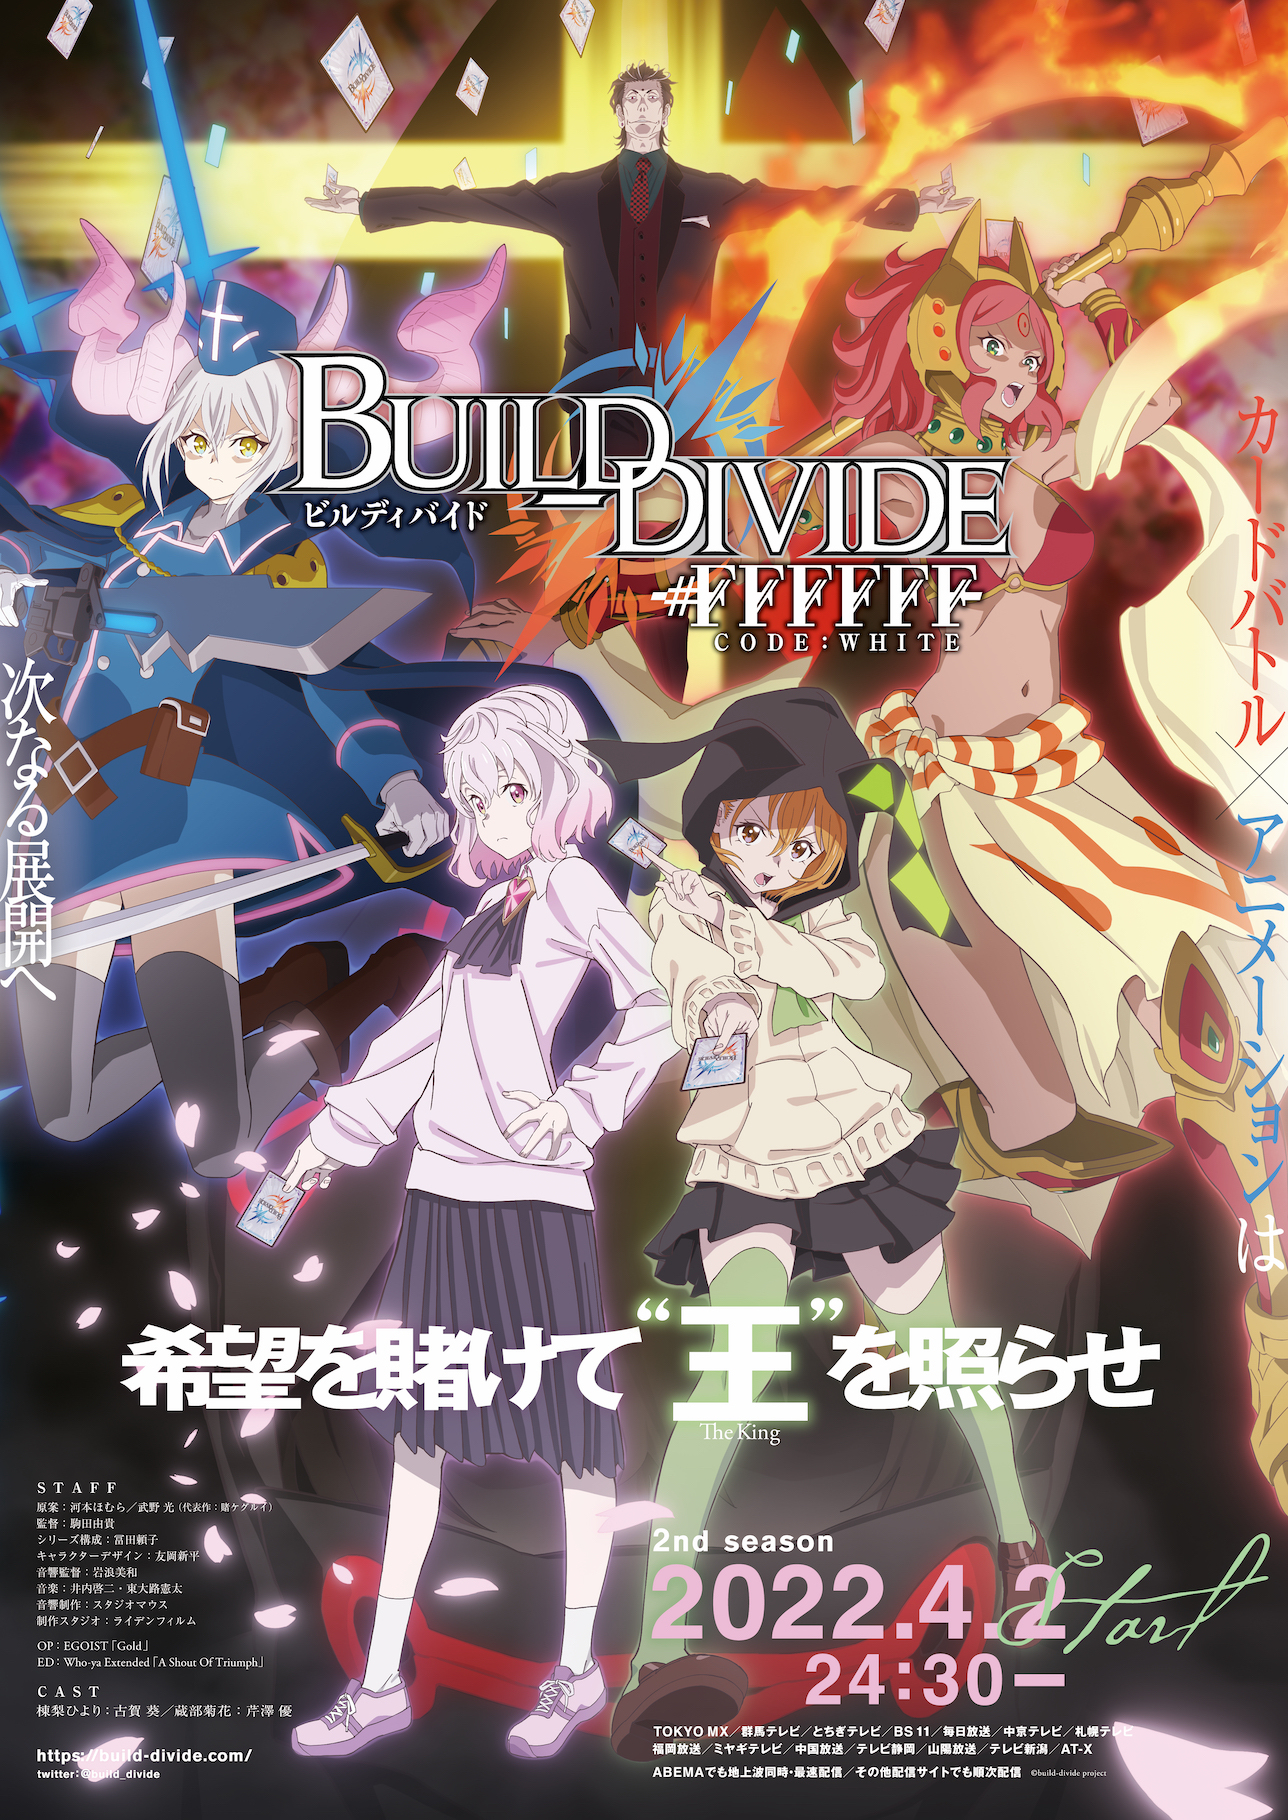 TVアニメ『ビルディバイド -#FFFFFF-』 （C）build-divide project